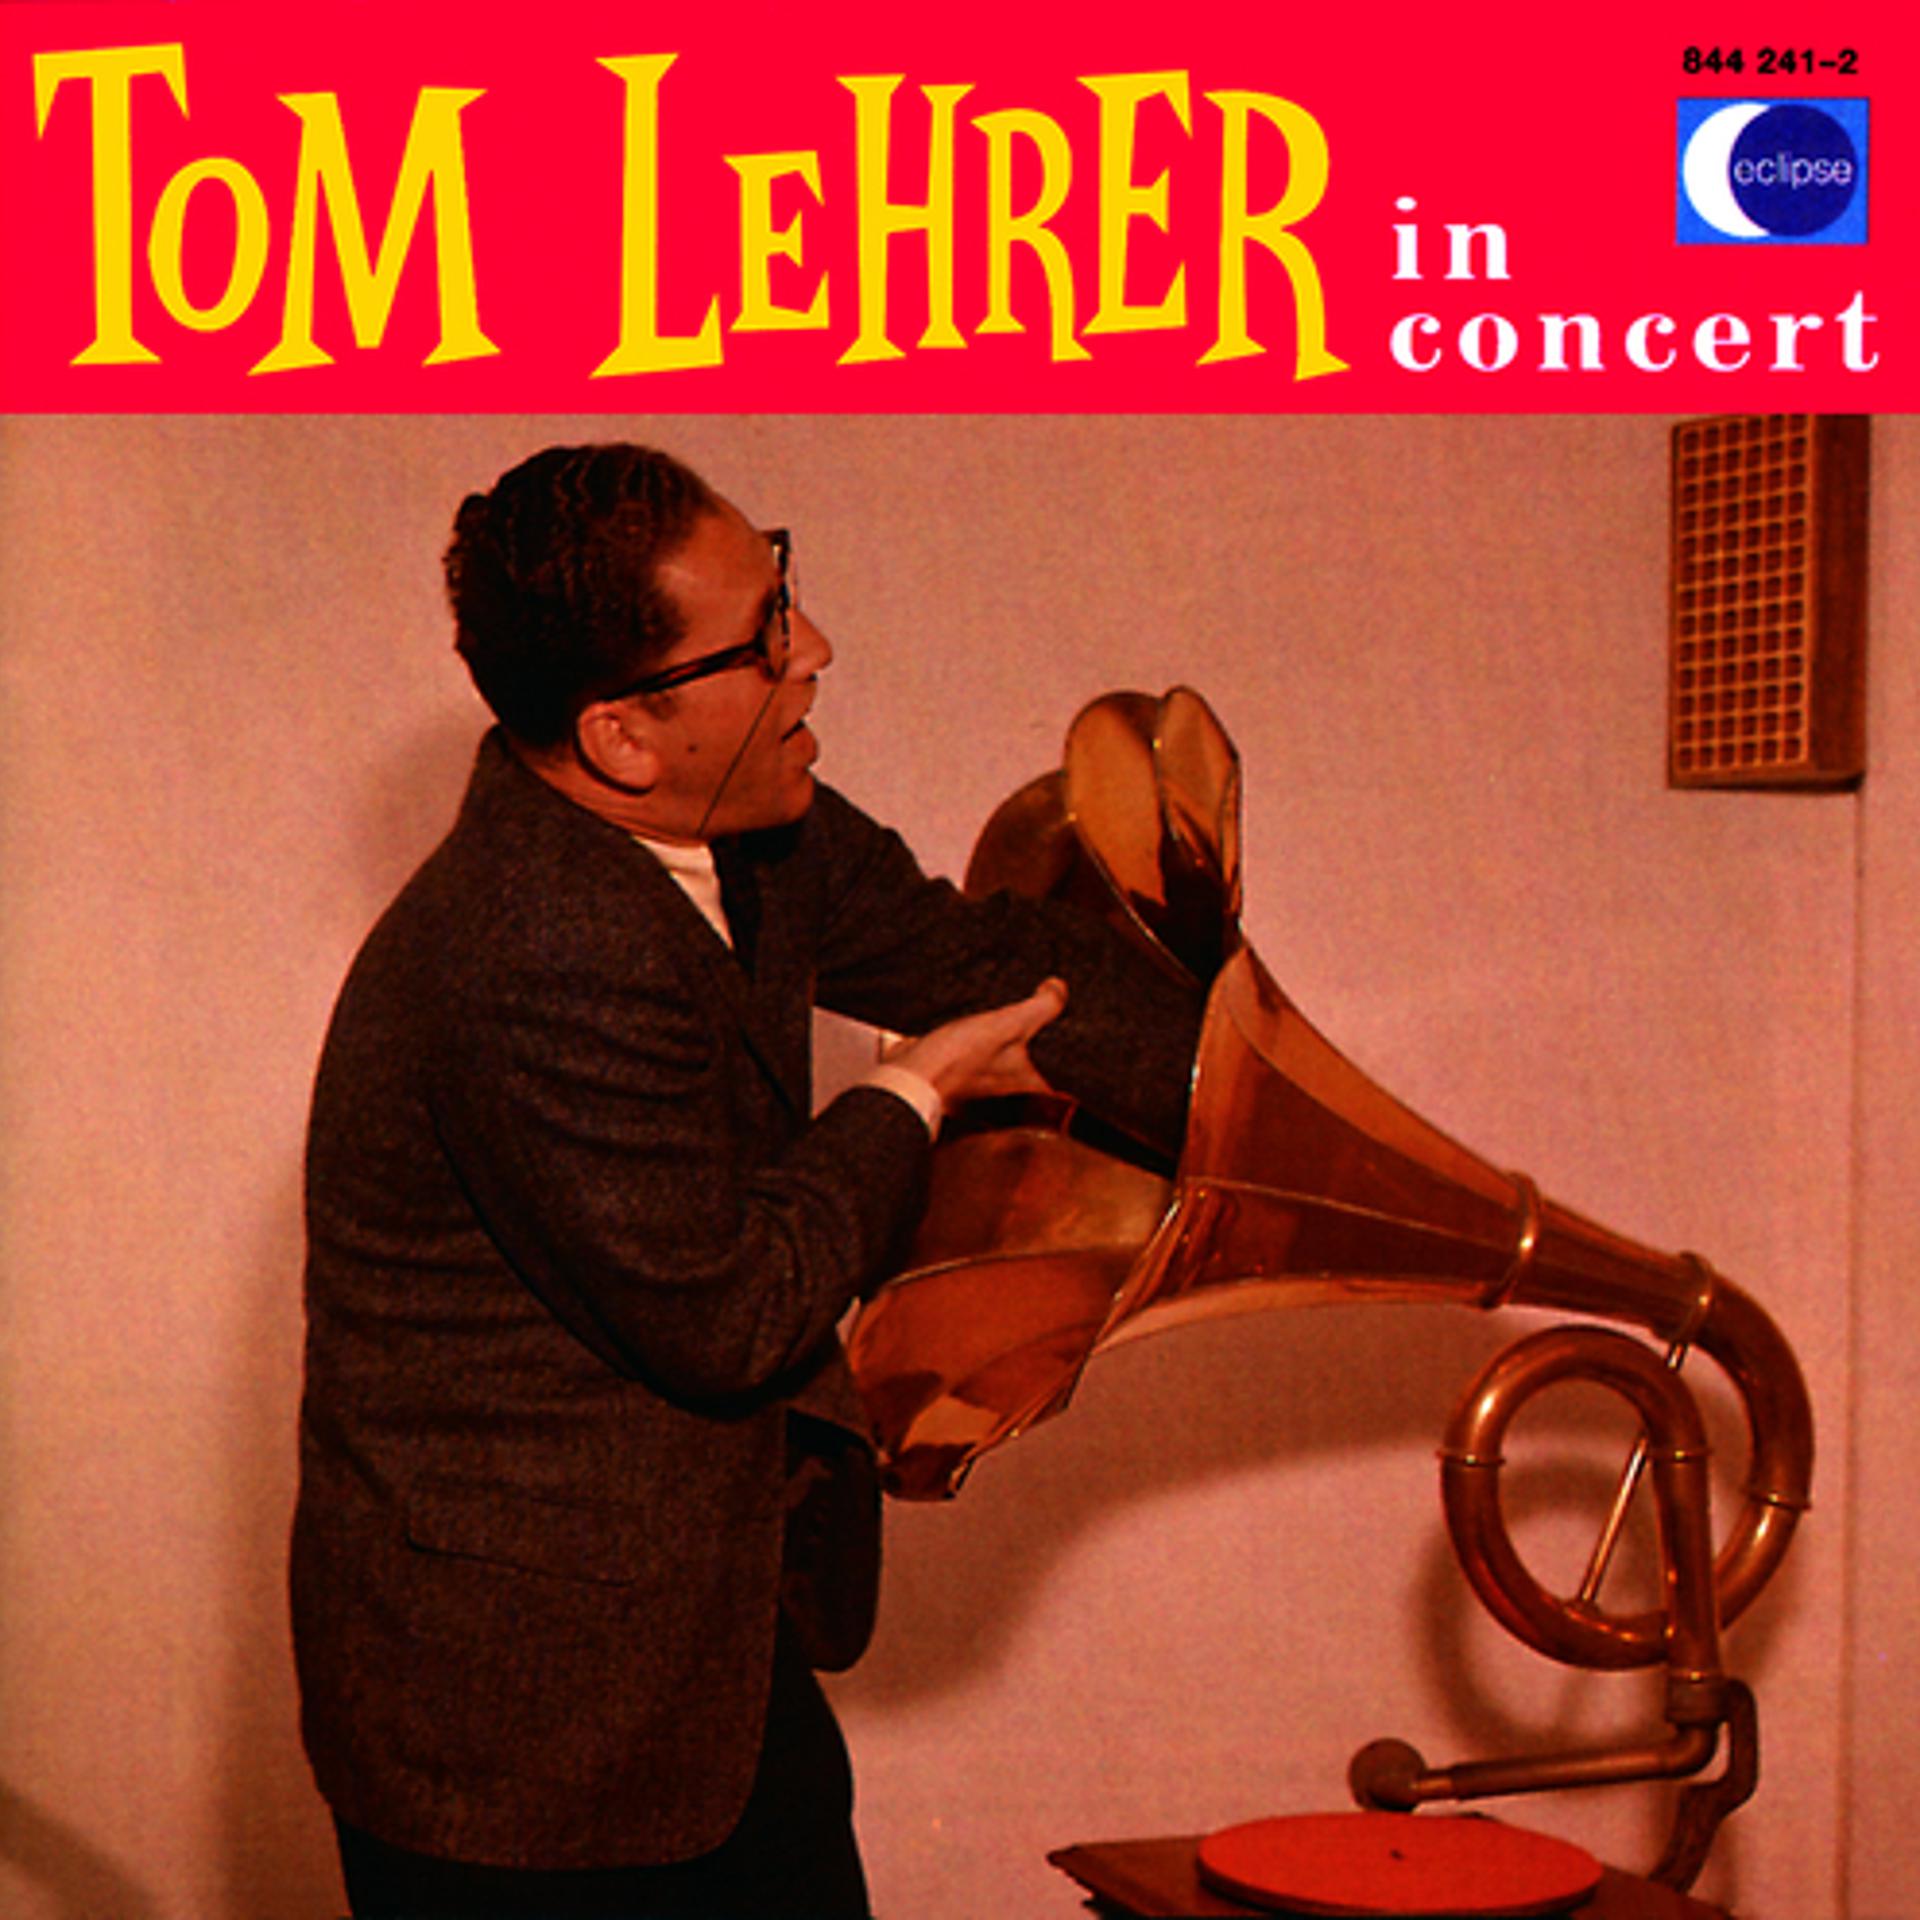 Tom lehrer. Том Лерер. Tom Lehrer in Concert том Лерер. The masochism Tango Tom Lehrer. The masochism Tango обложка.